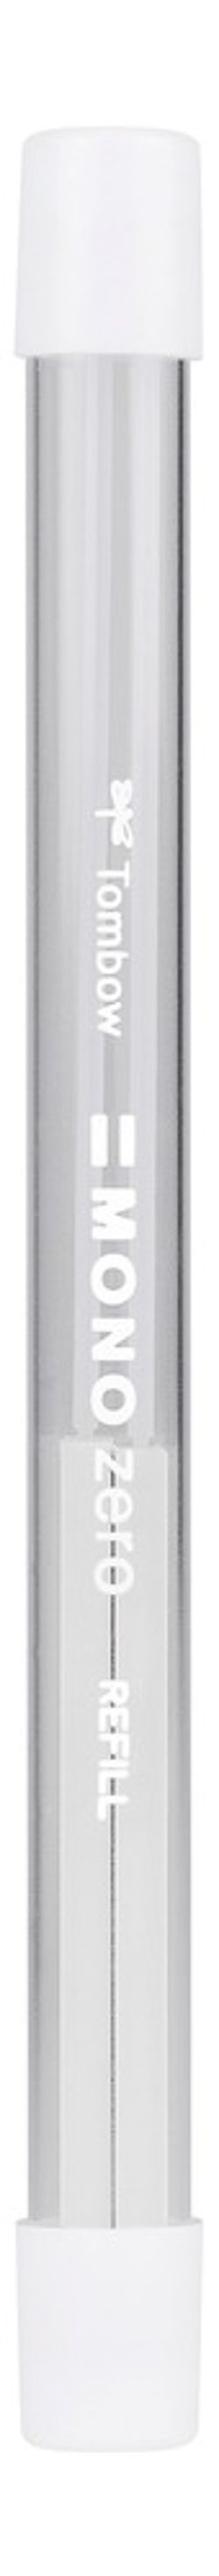 MONO zéro classic rectangular tip white/blue/black with refill